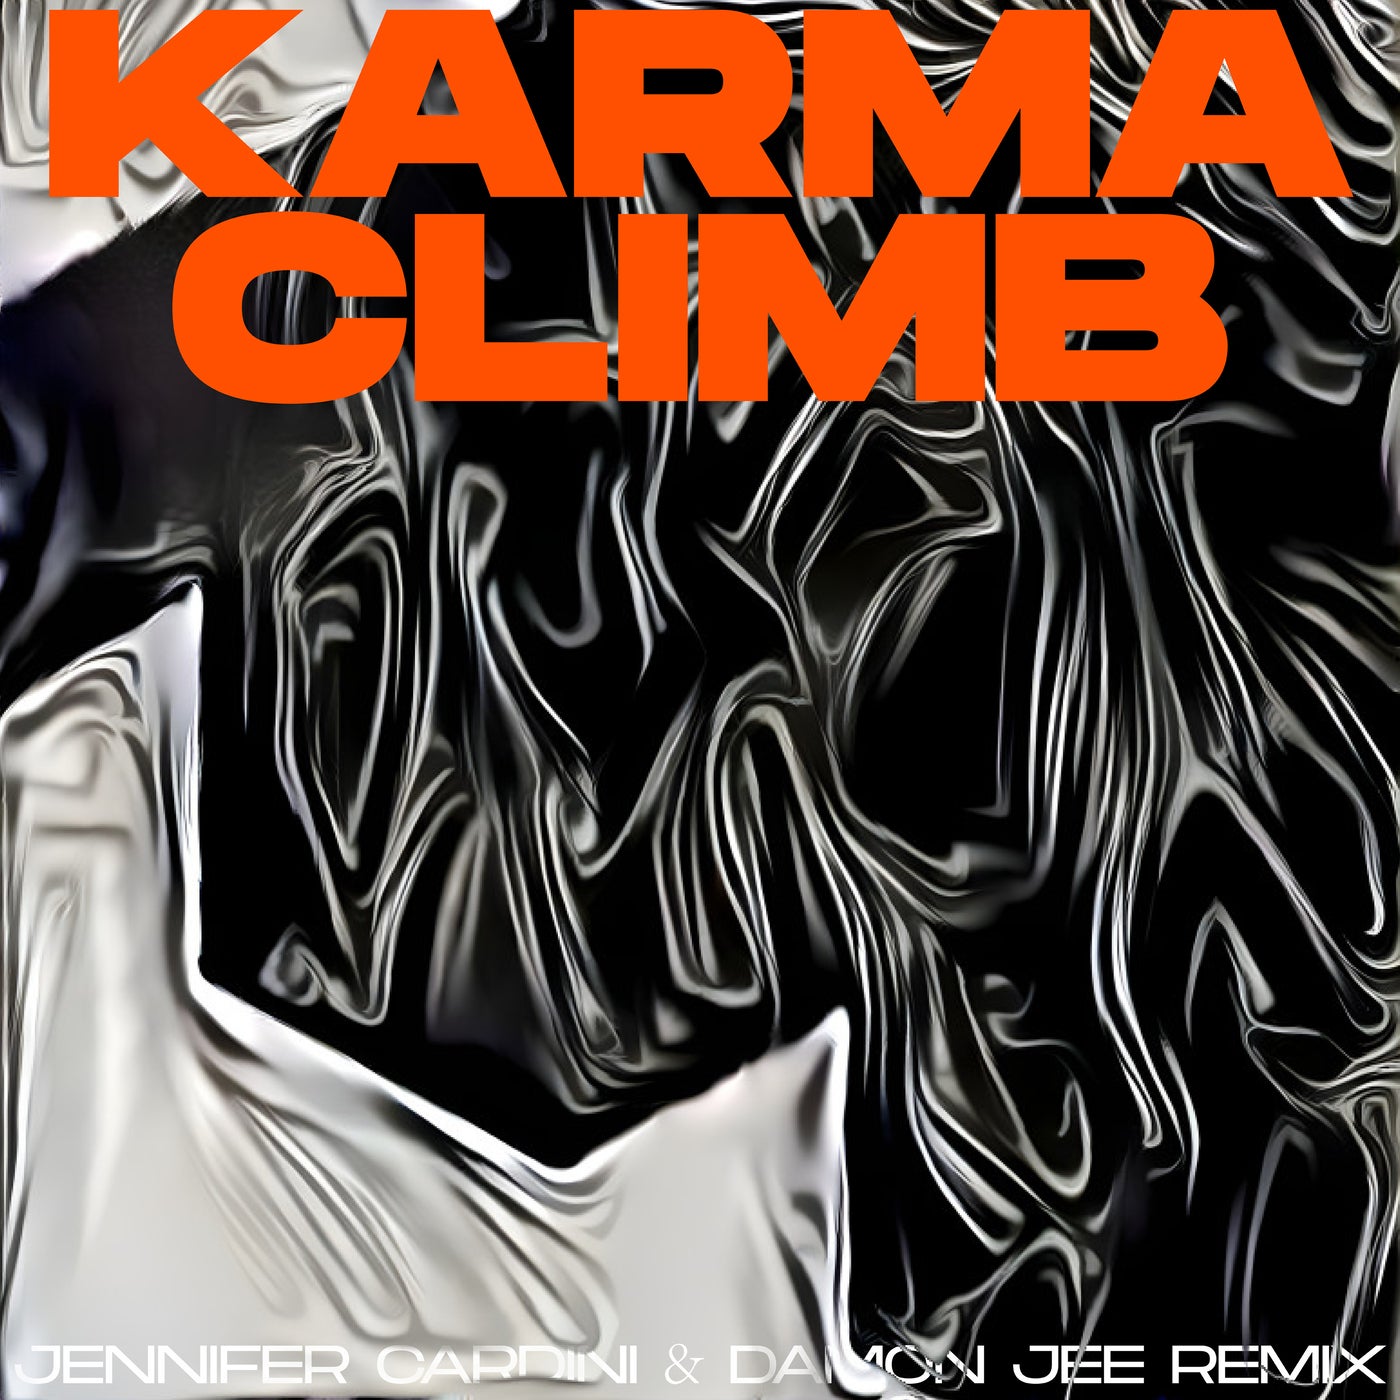 News – Editors – Karma Climb (Jennifer Cardini & Damon Jee Remix)